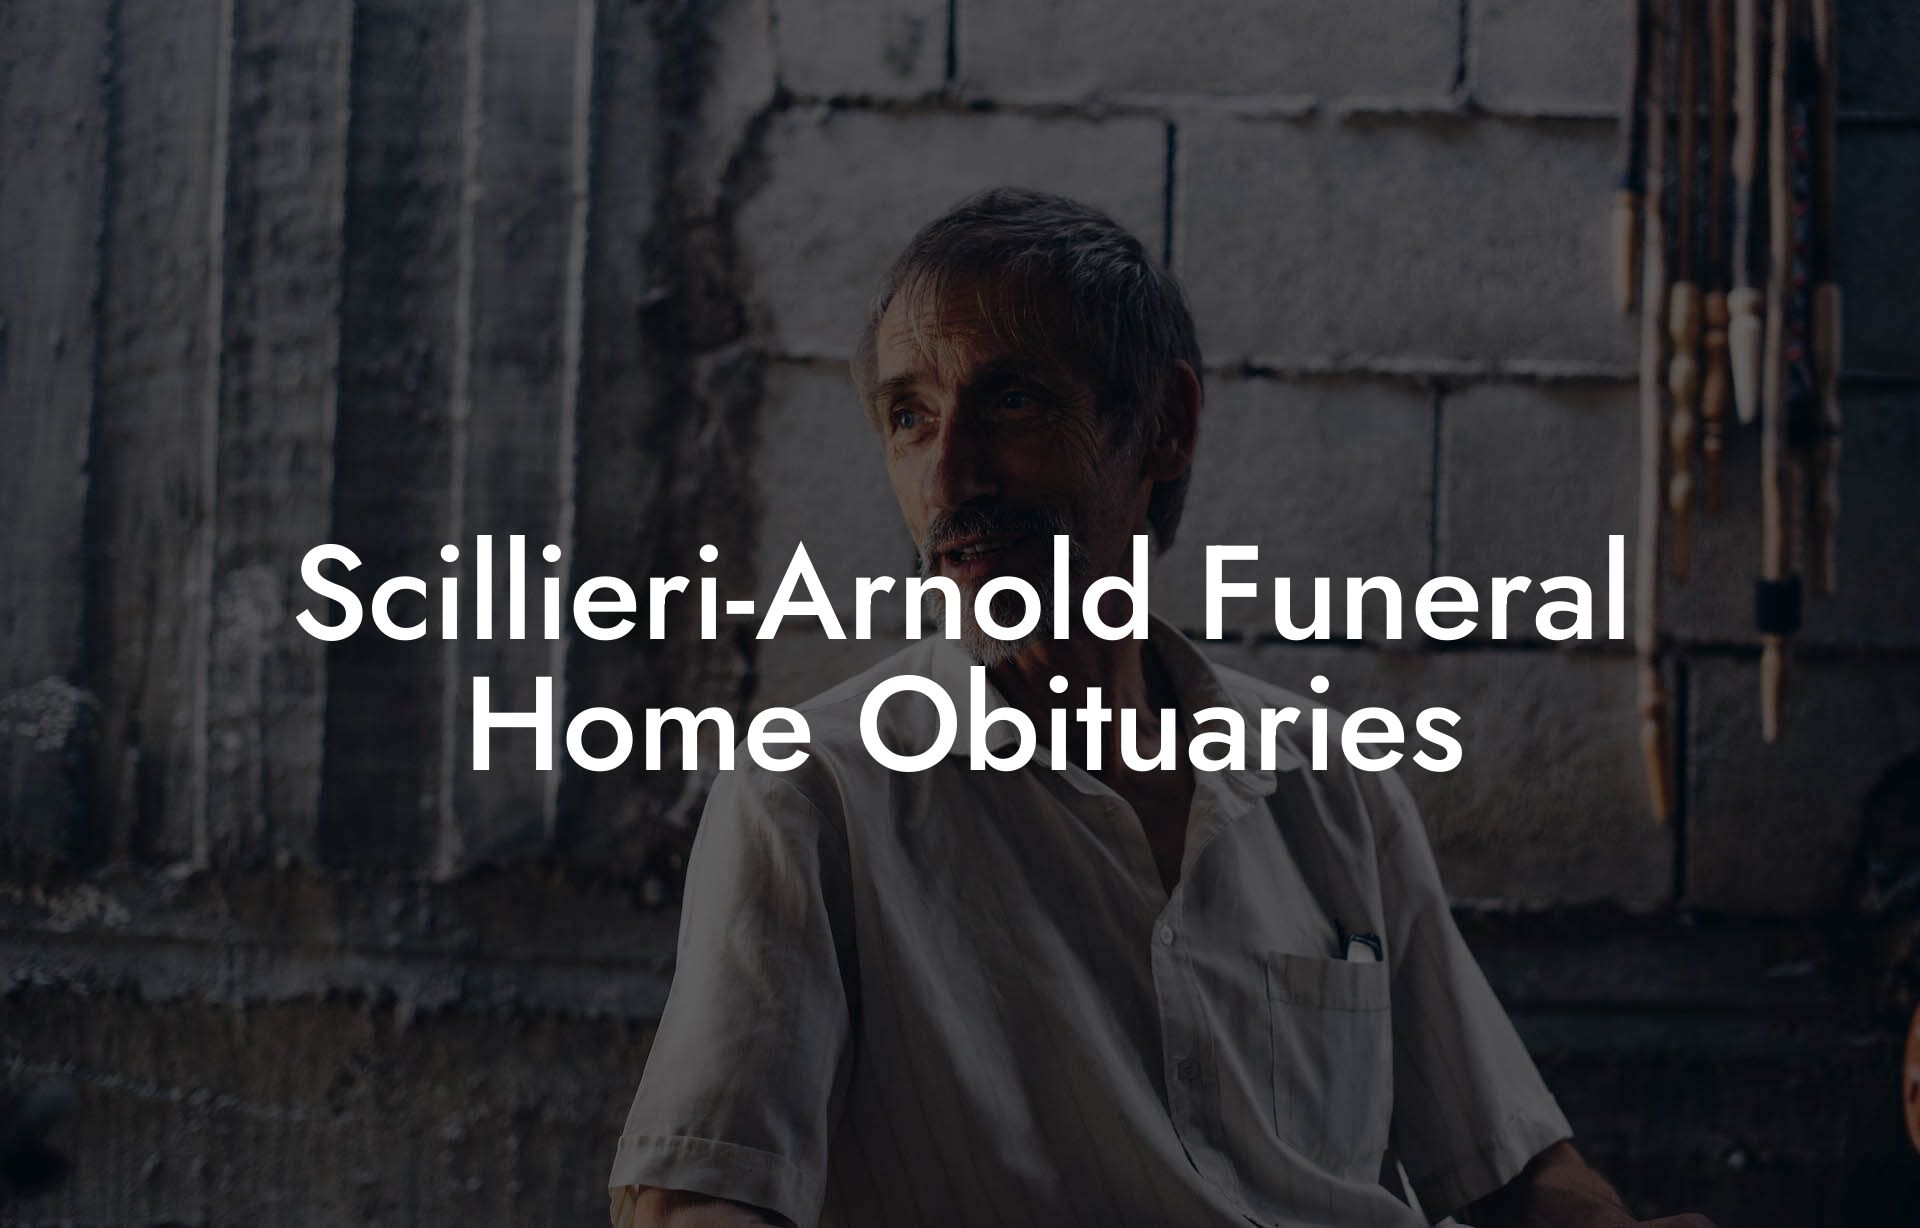 Scillieri-Arnold Funeral Home Obituaries